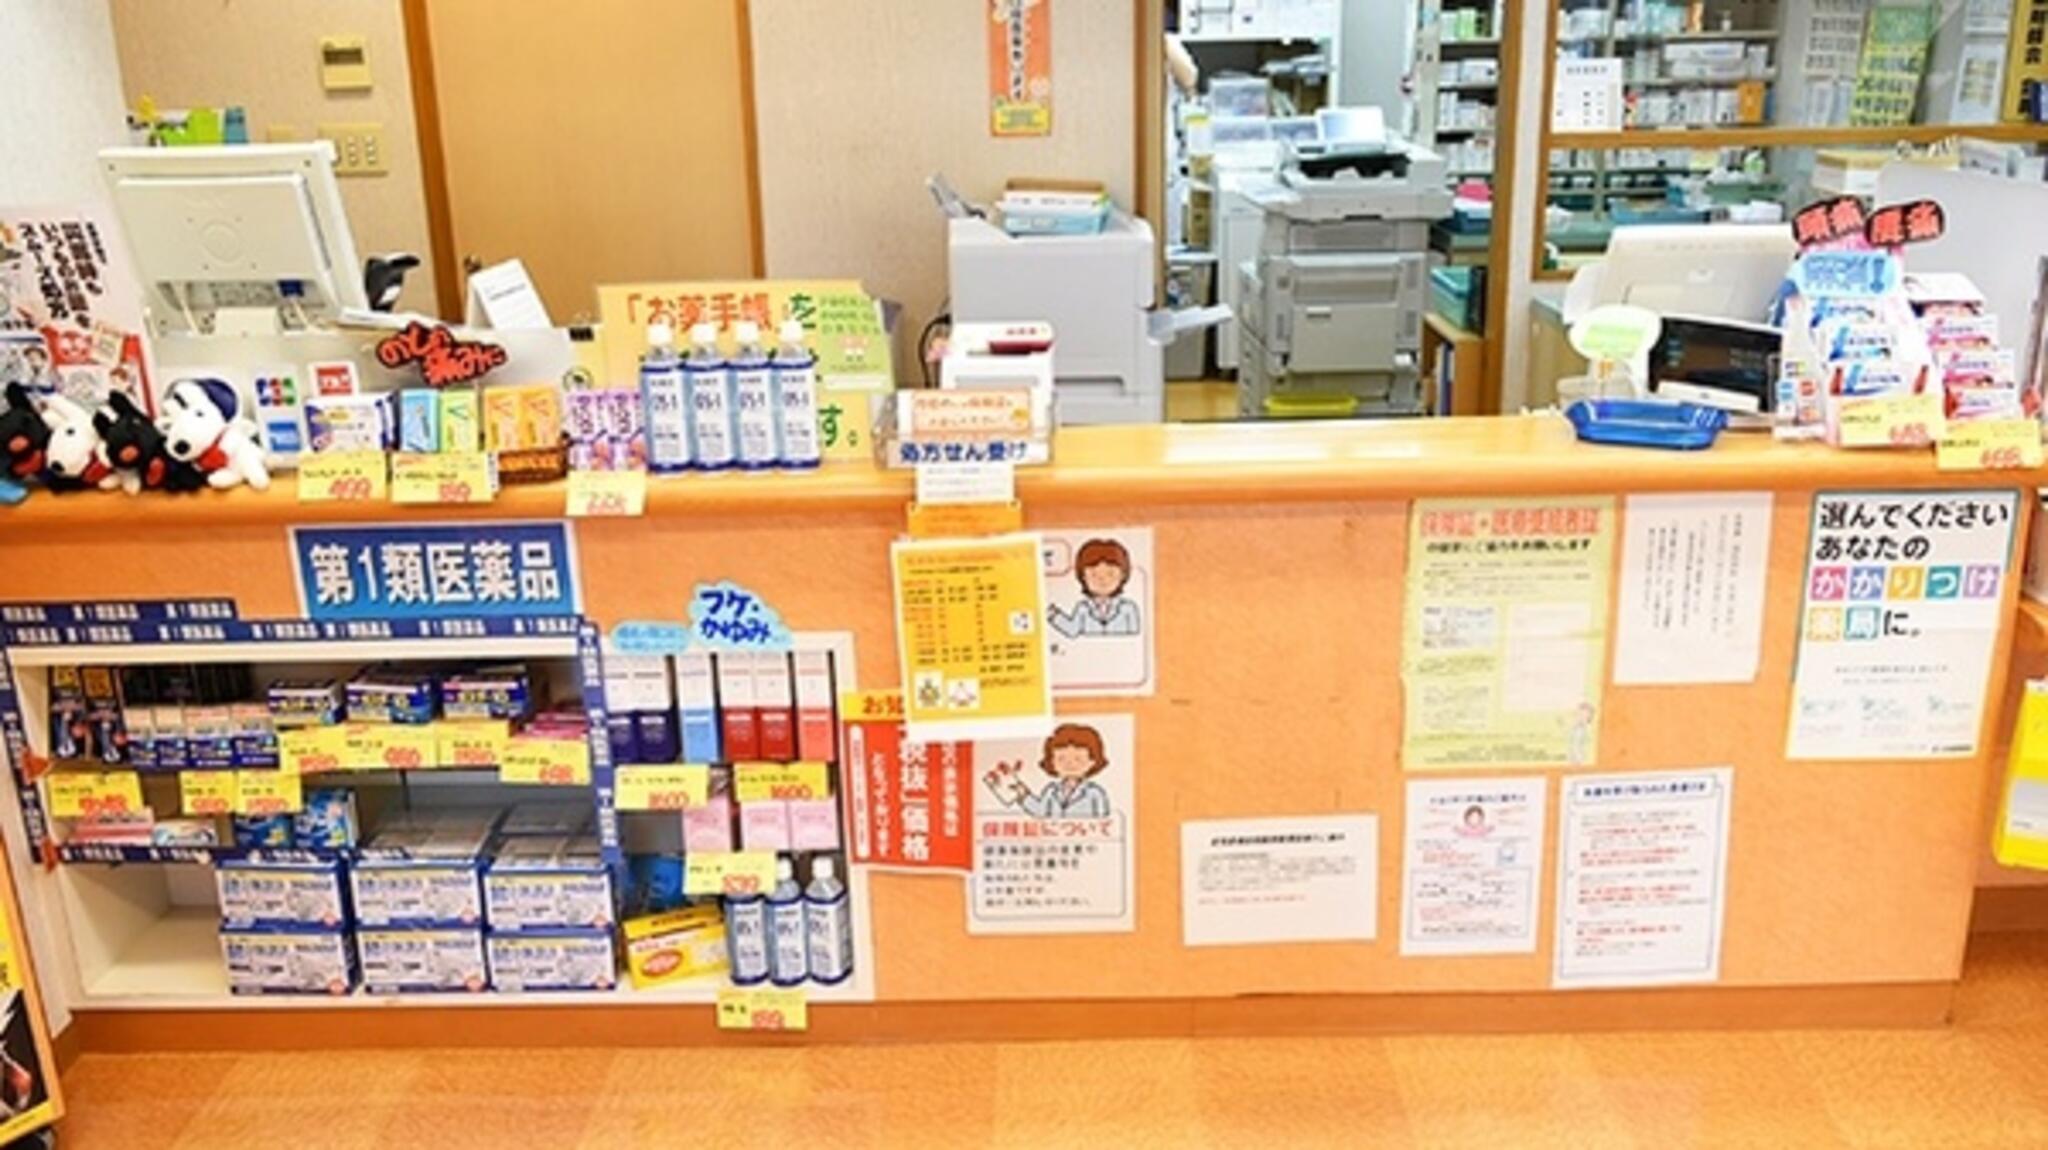 富士薬品 セイムス浦和駅西口薬局の代表写真2